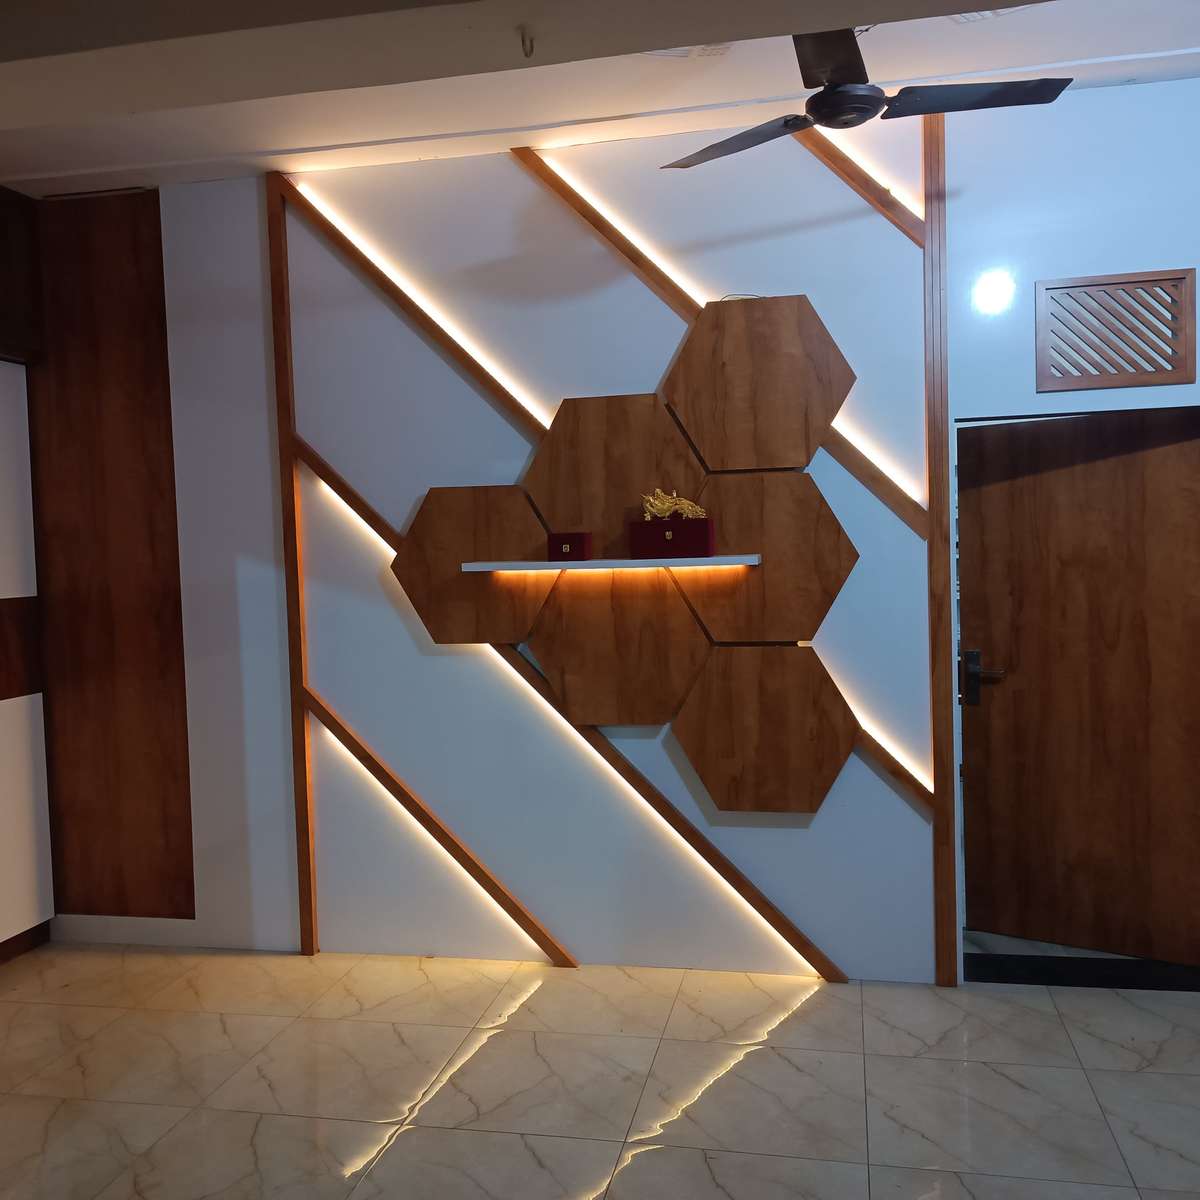 Lighting, Storage Designs by Carpenter vipin jangra, Panipat | Kolo